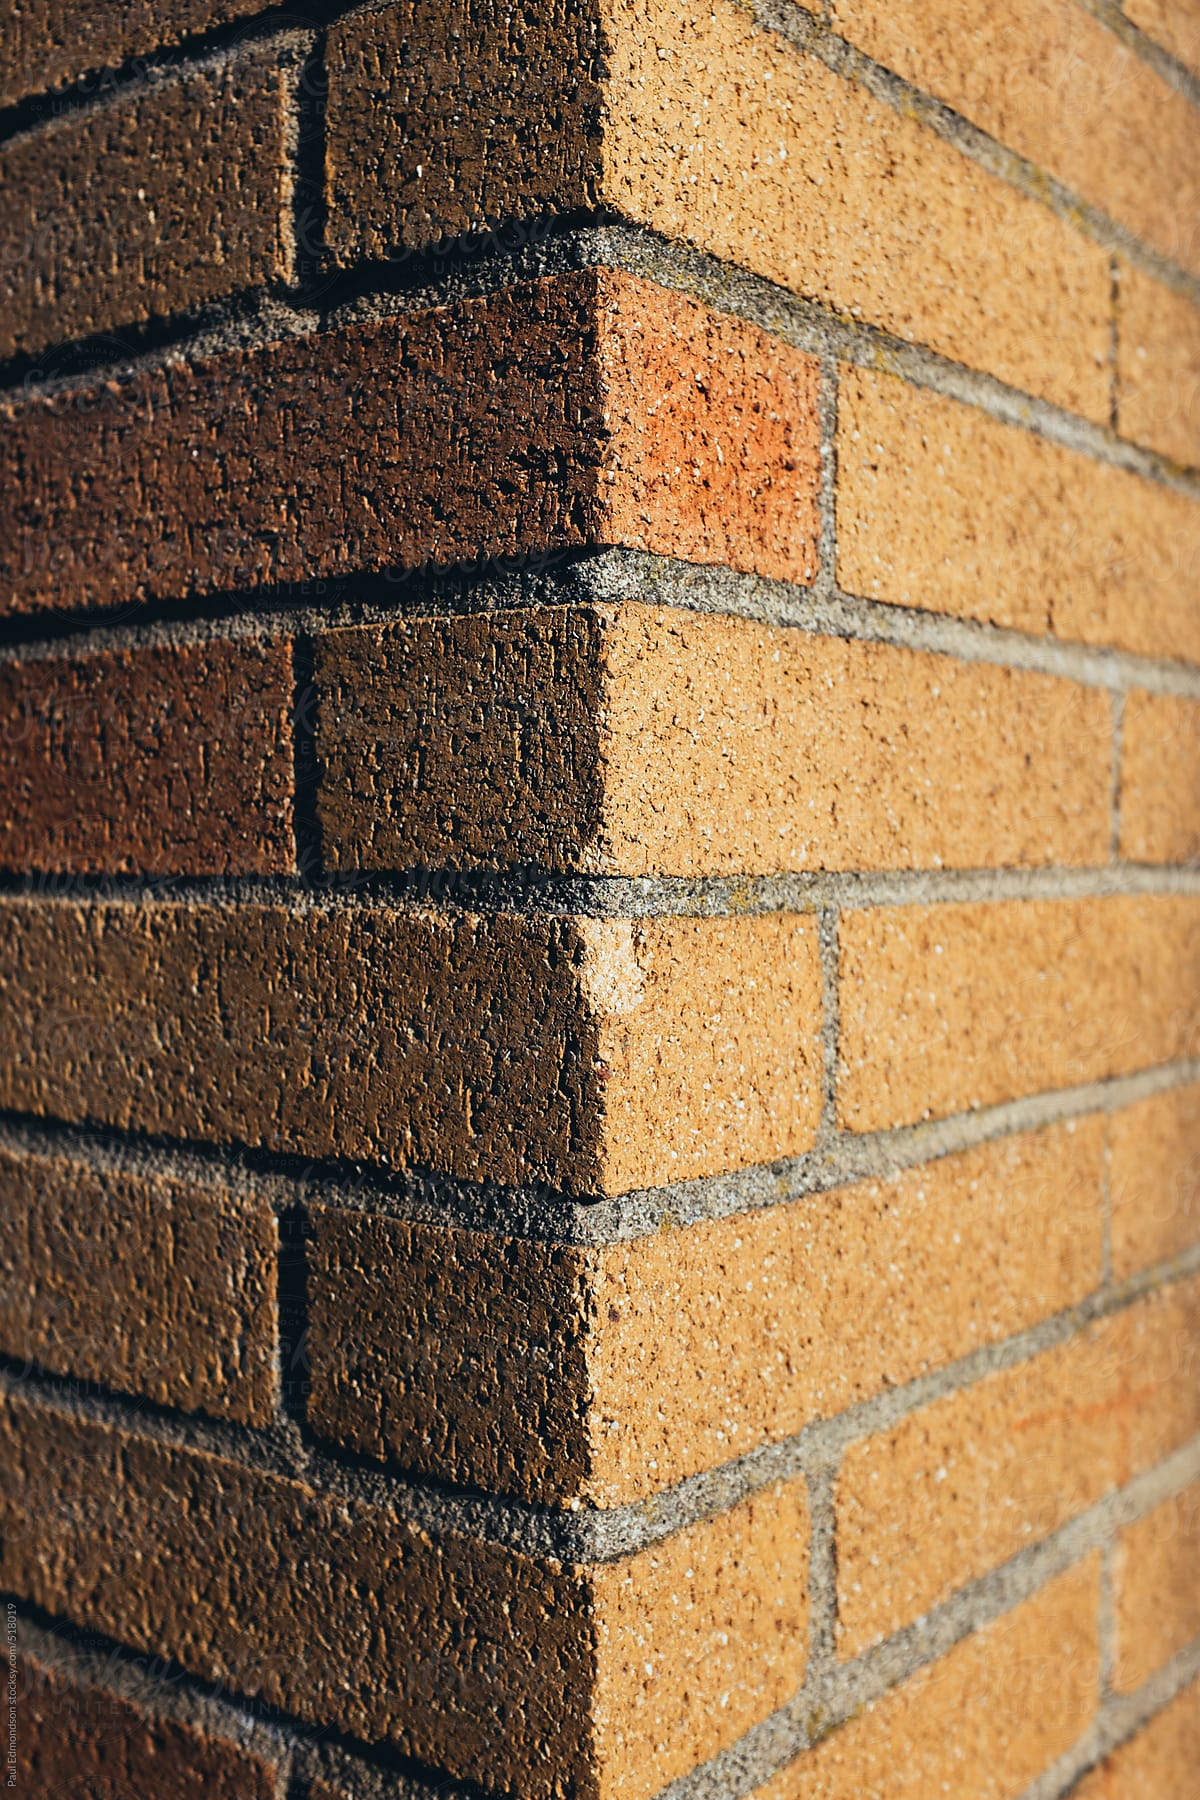 Corner of brick wall, casting shadow